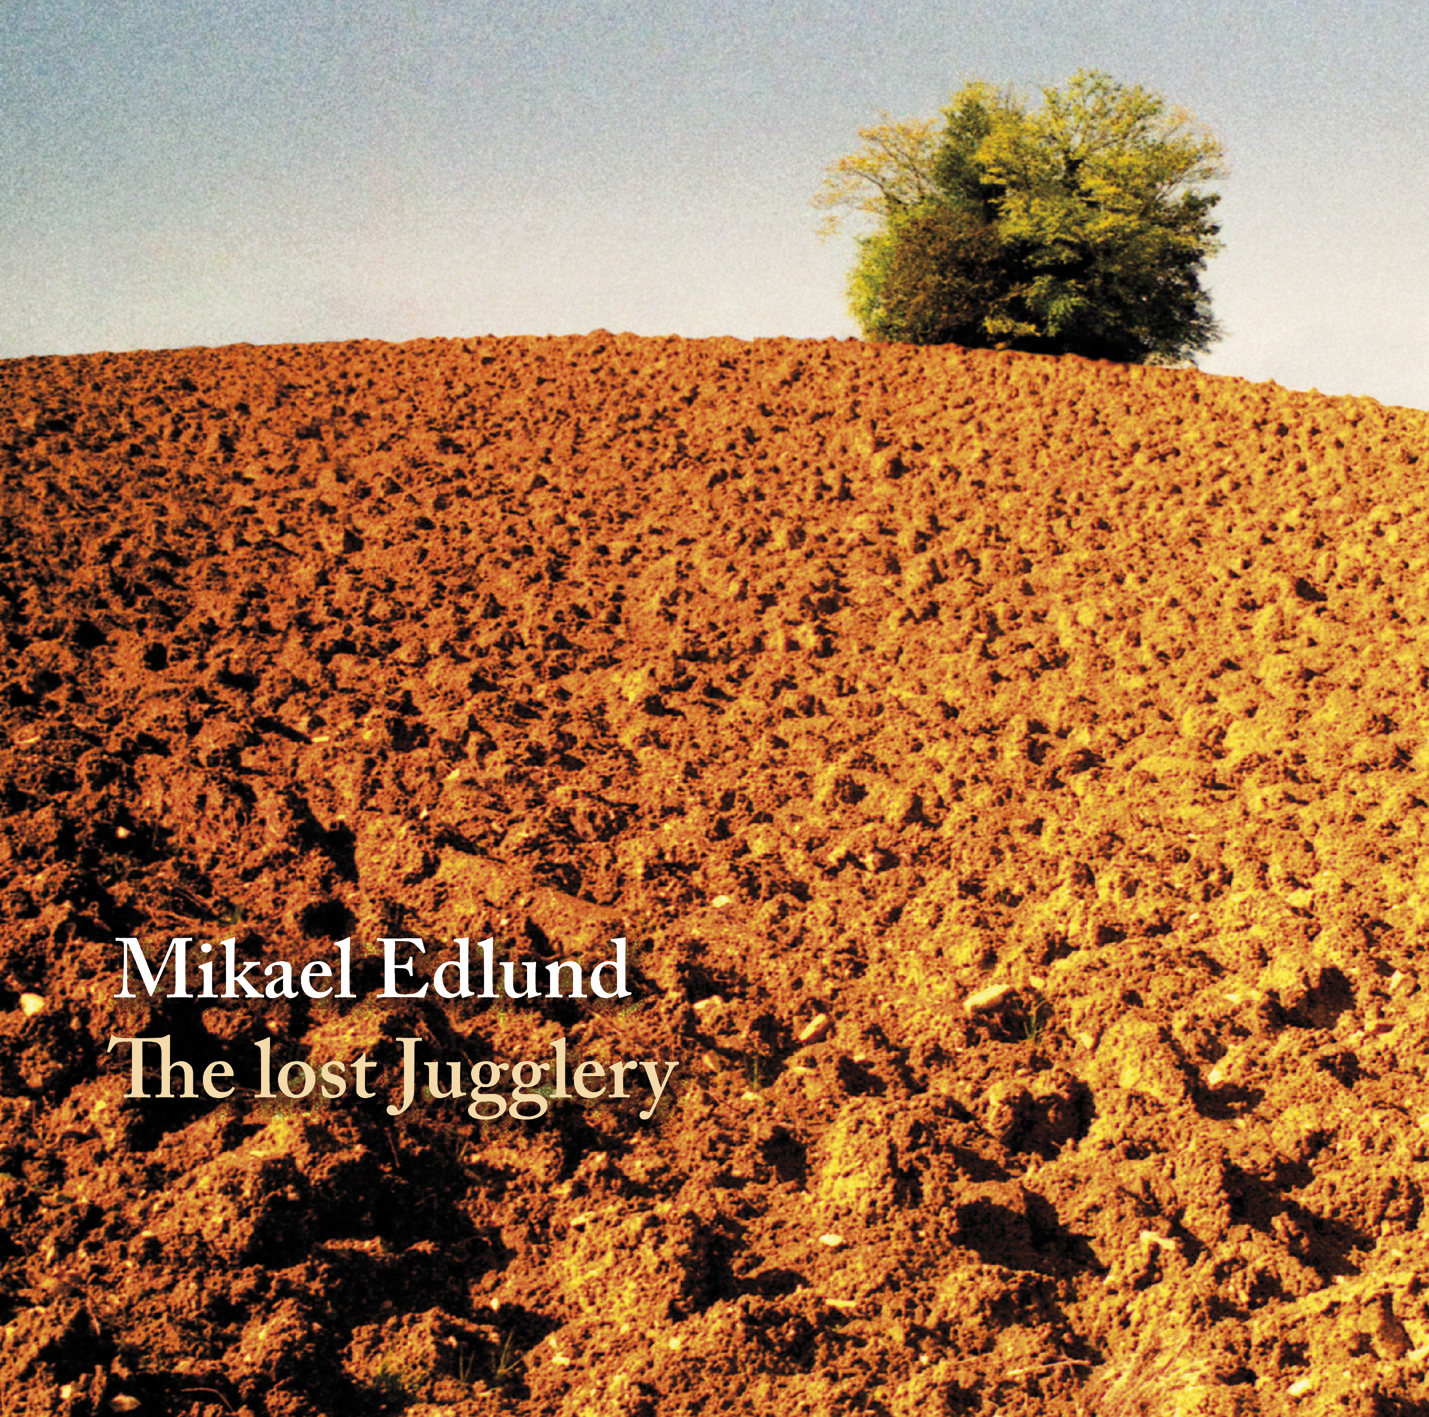 Mikael Edlund: The lost Jugglery